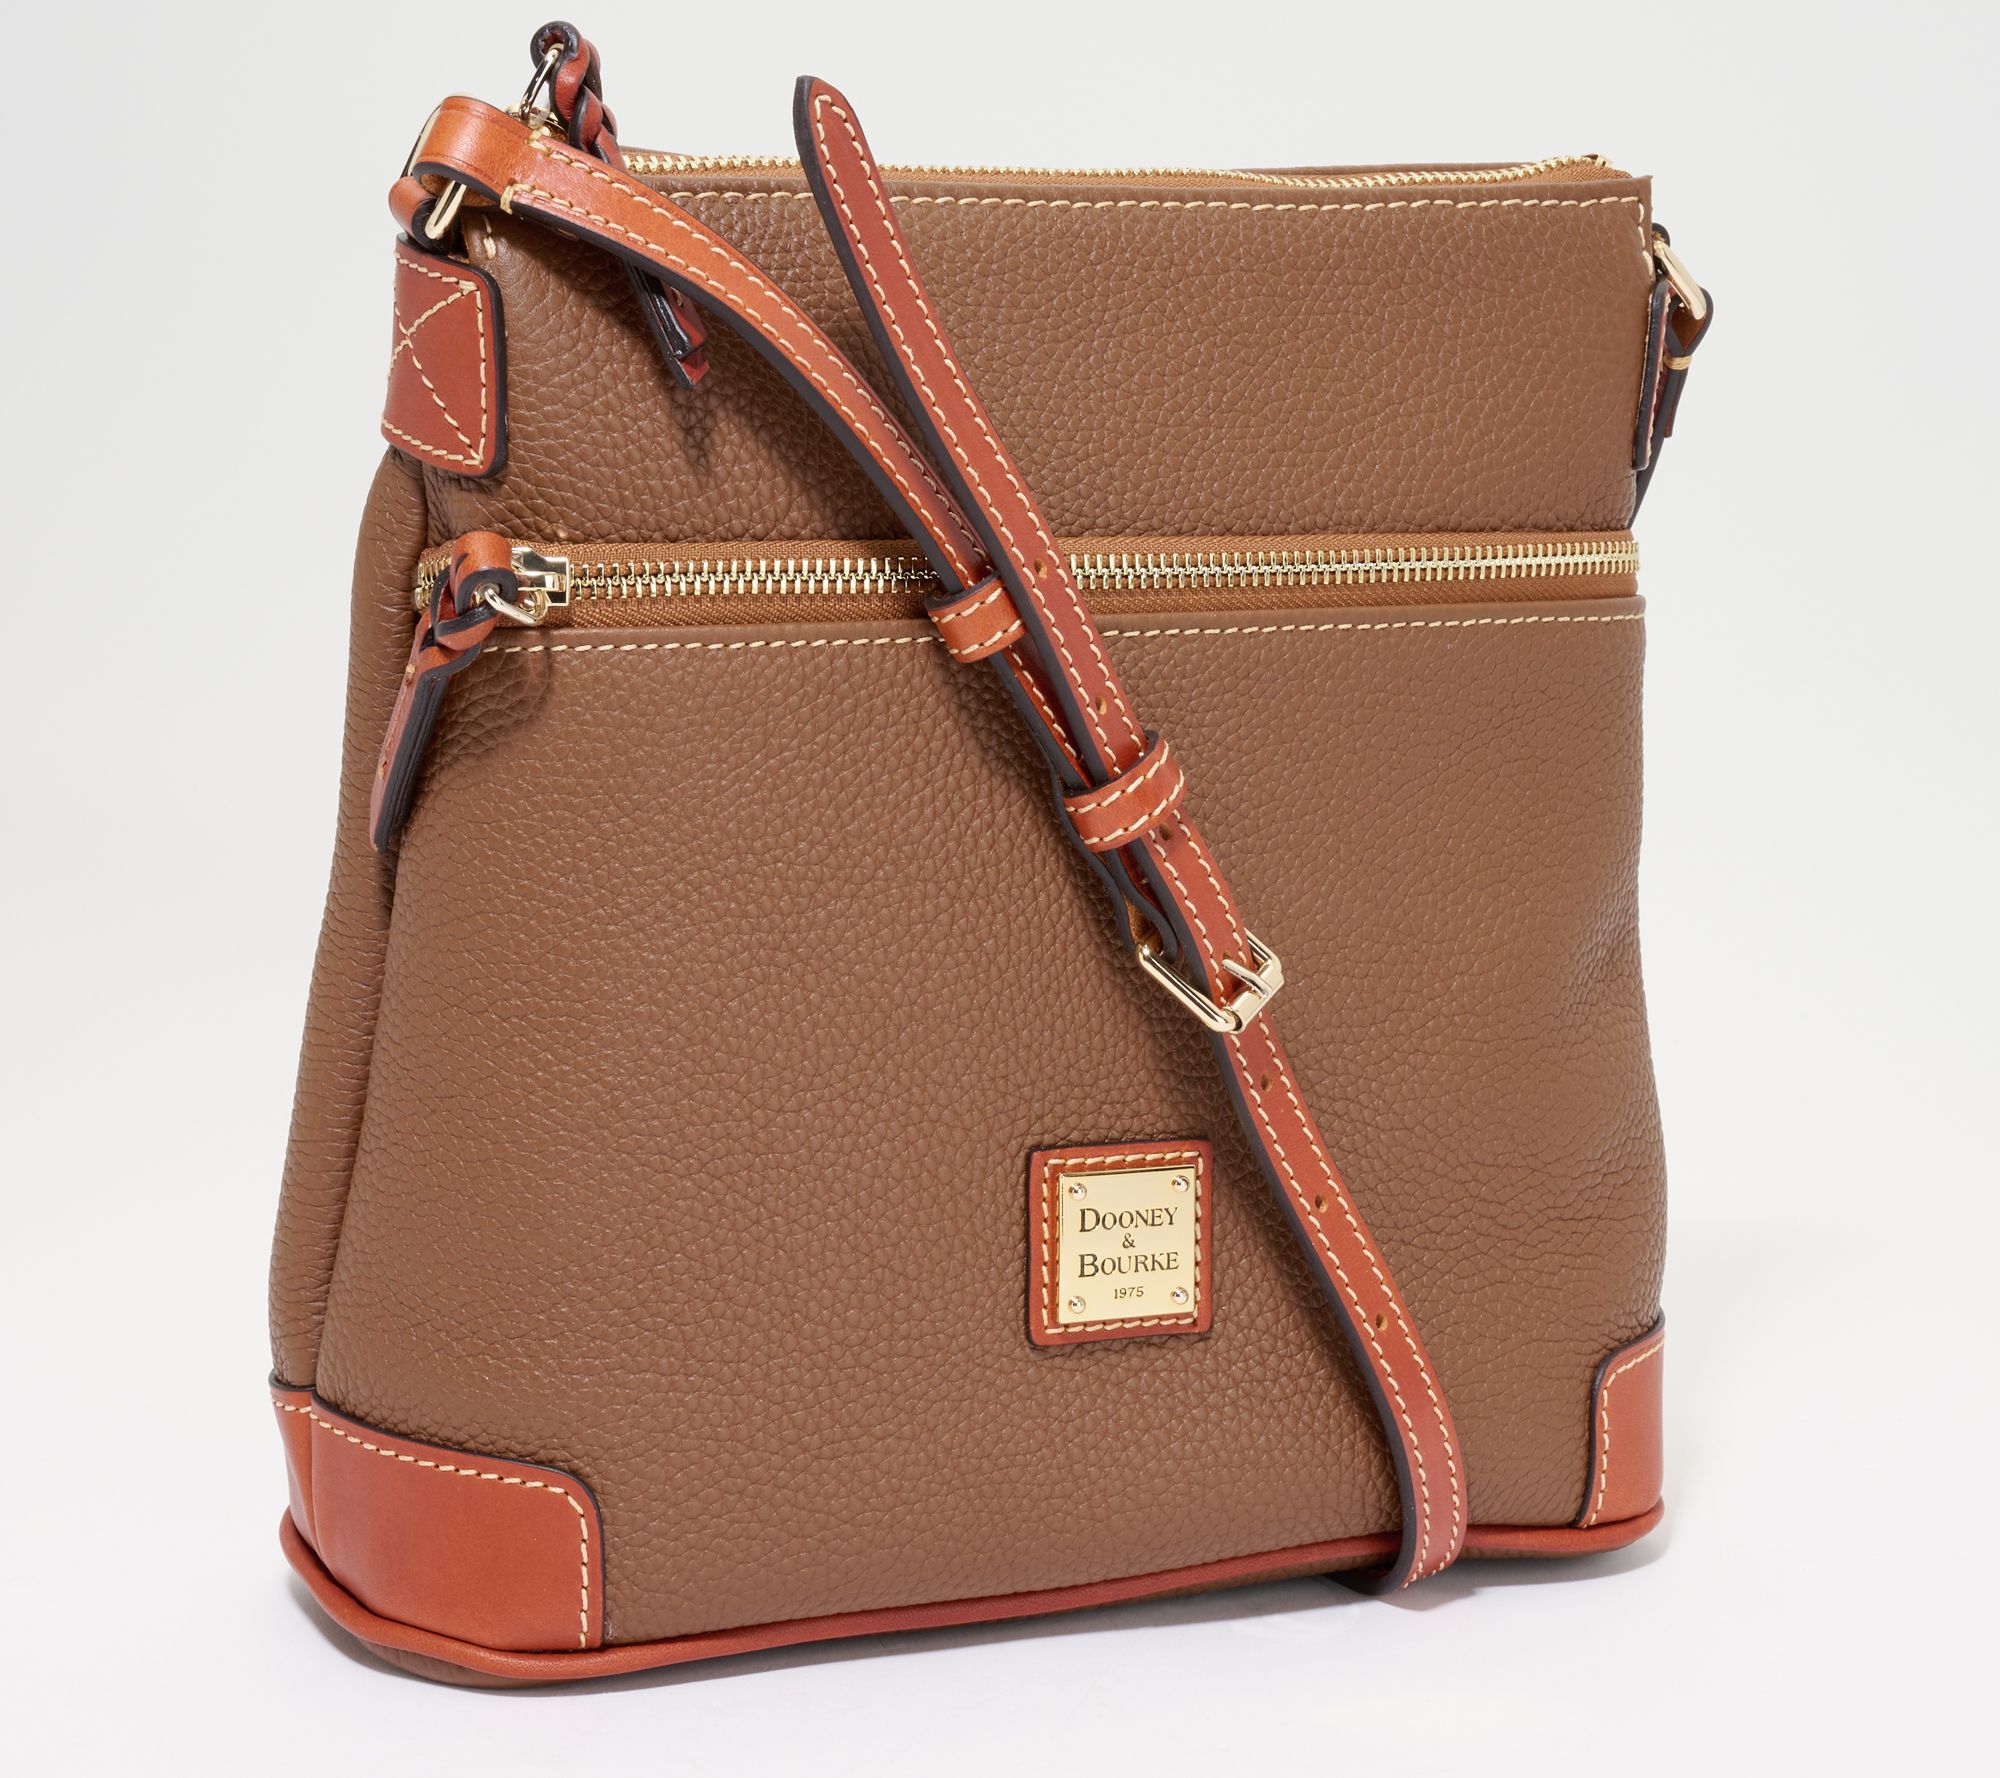 Dooney & Bourke Florentine Leather Twist Sac Shoulder Bag in Elephant  from QVC